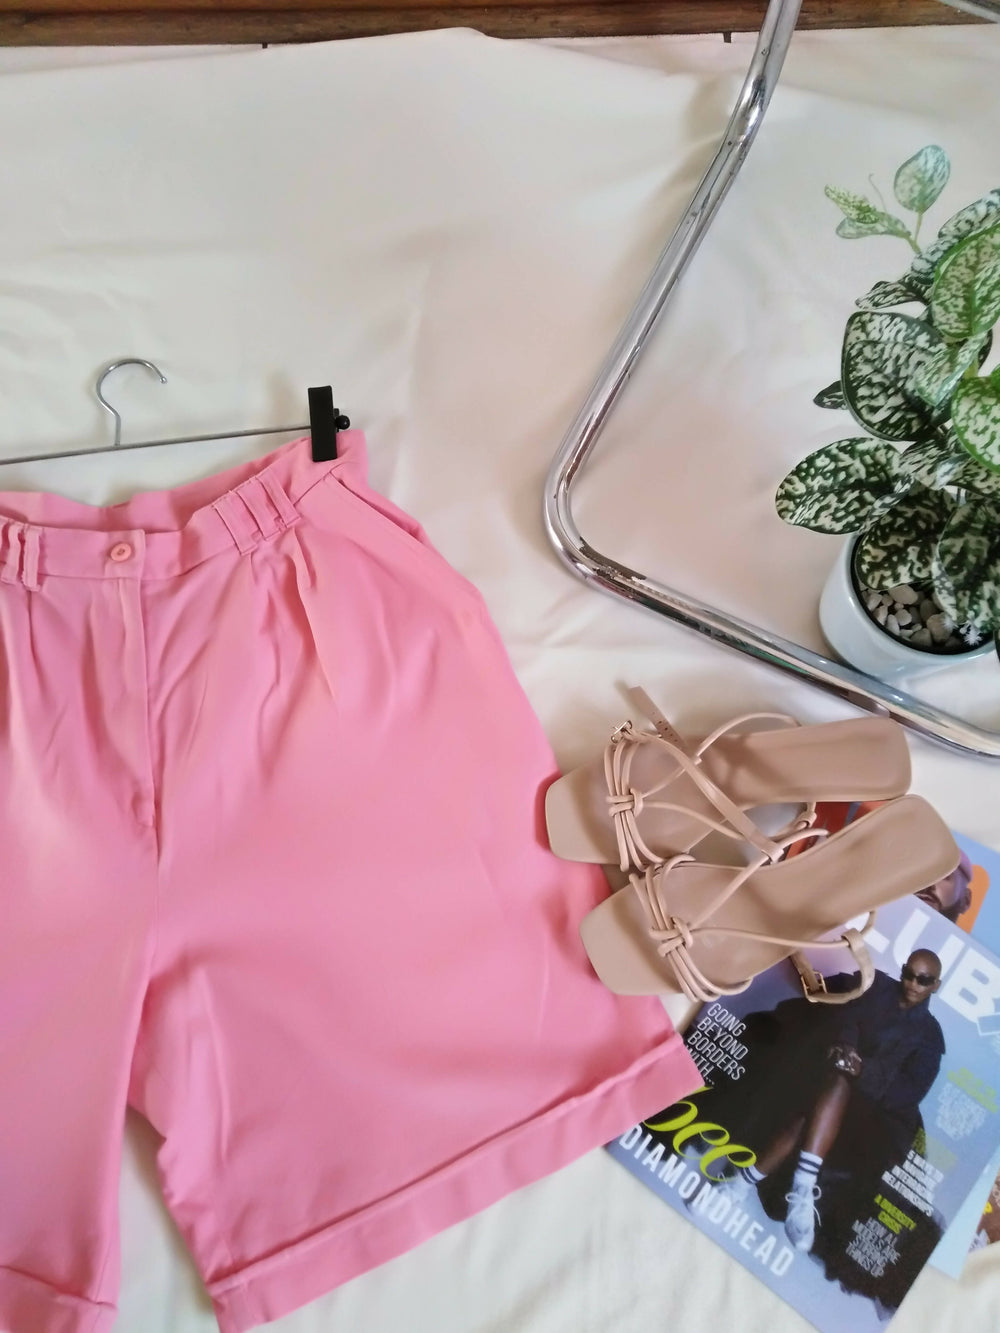 Image of Pink cotton shorts